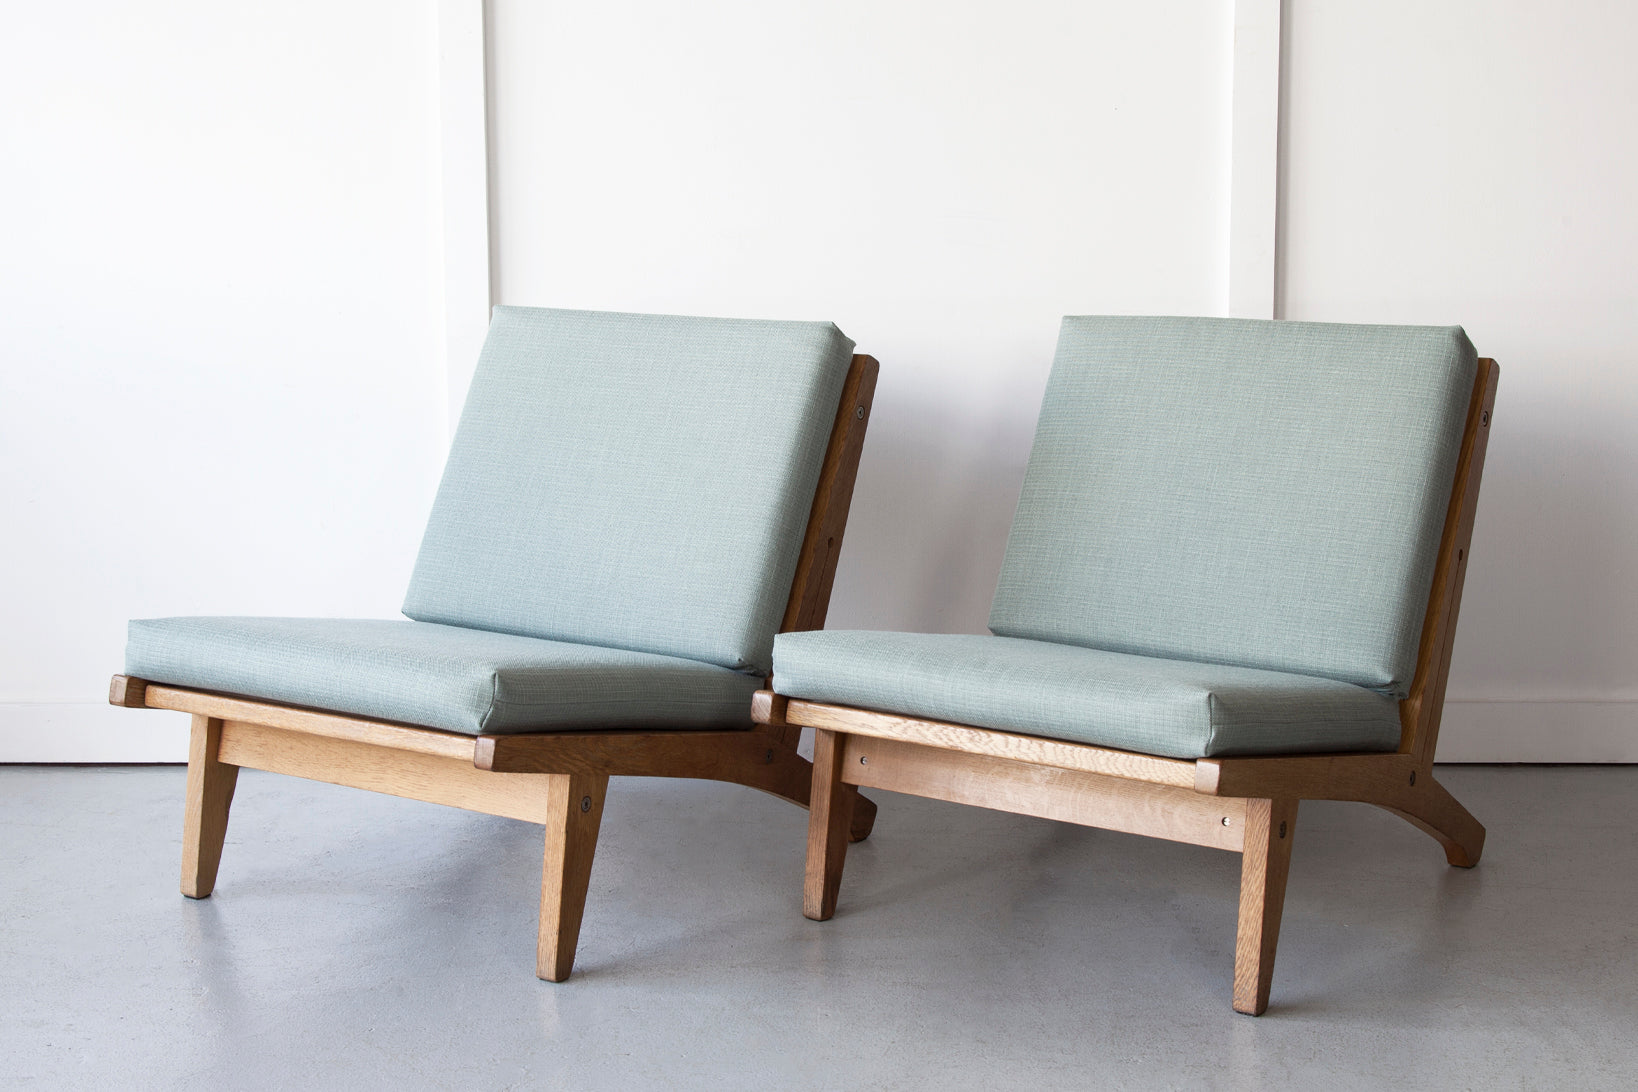 A Pair of Hans J. Wegner Easy Chairs, Model GE-370